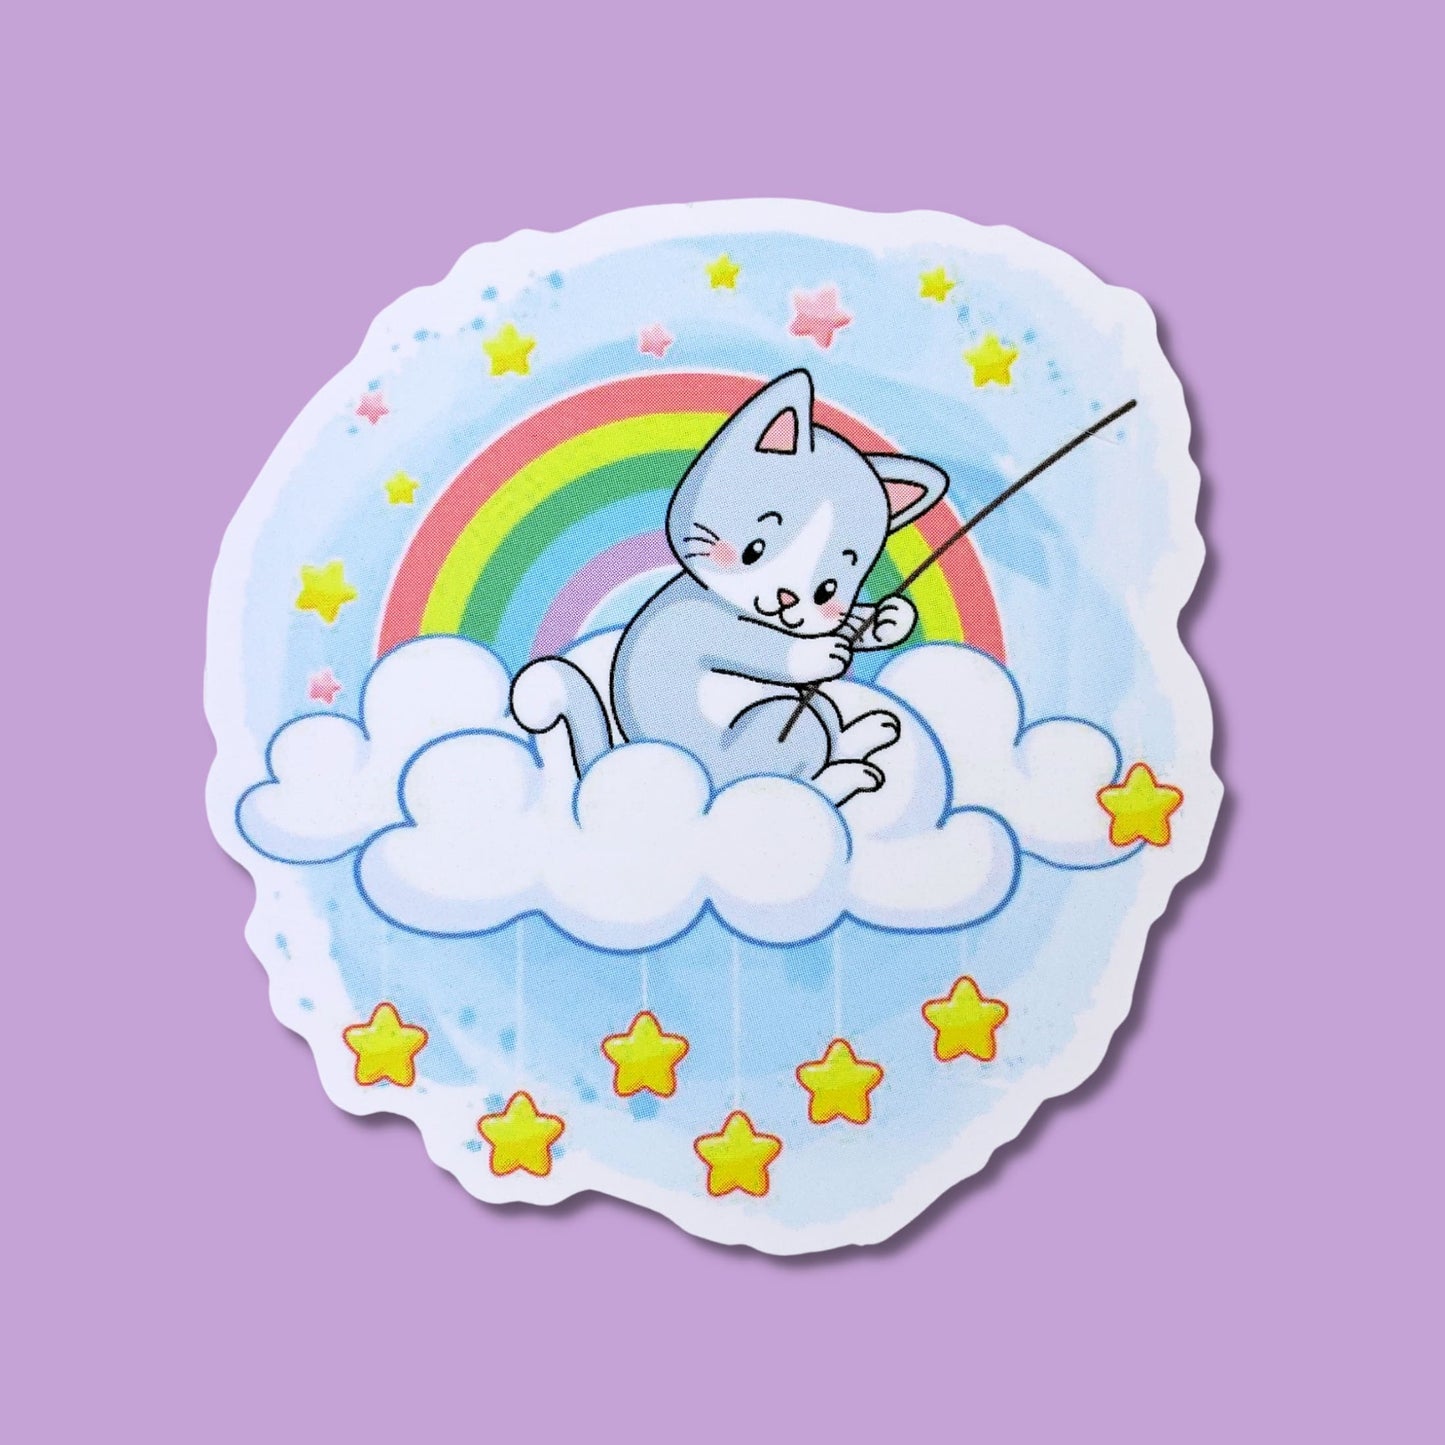 Fishing Stars Waterproof Sticker from Confetti Kitty, Only 1.00